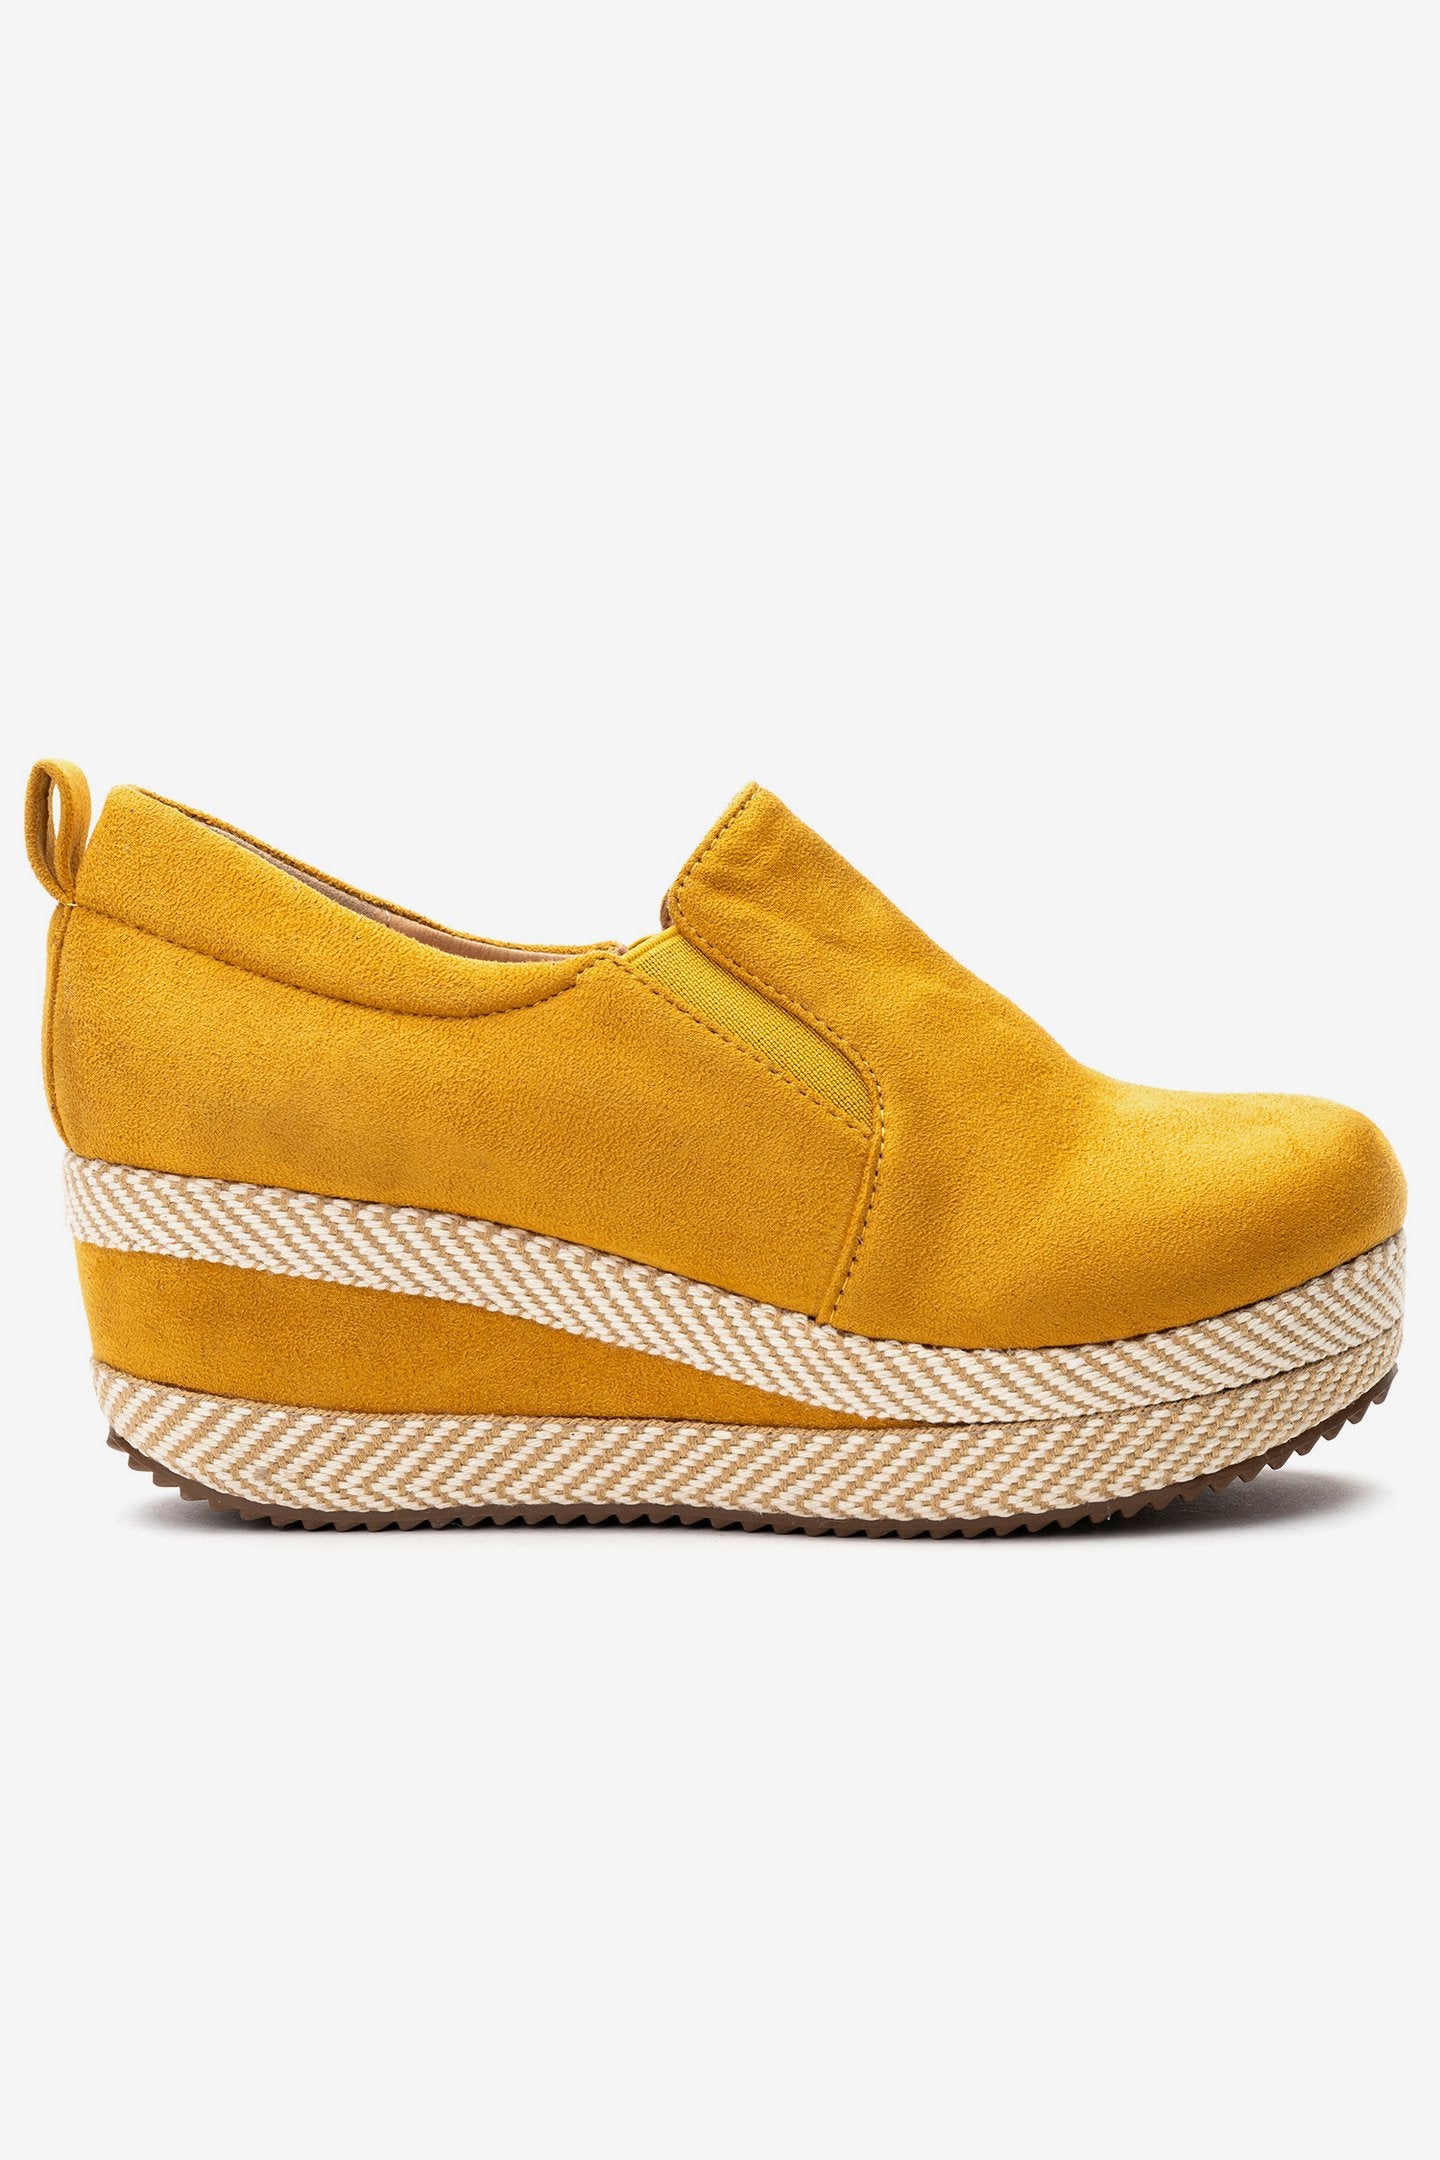 Zapato Mujer Amarillo Dakota Chancleta Chancleta